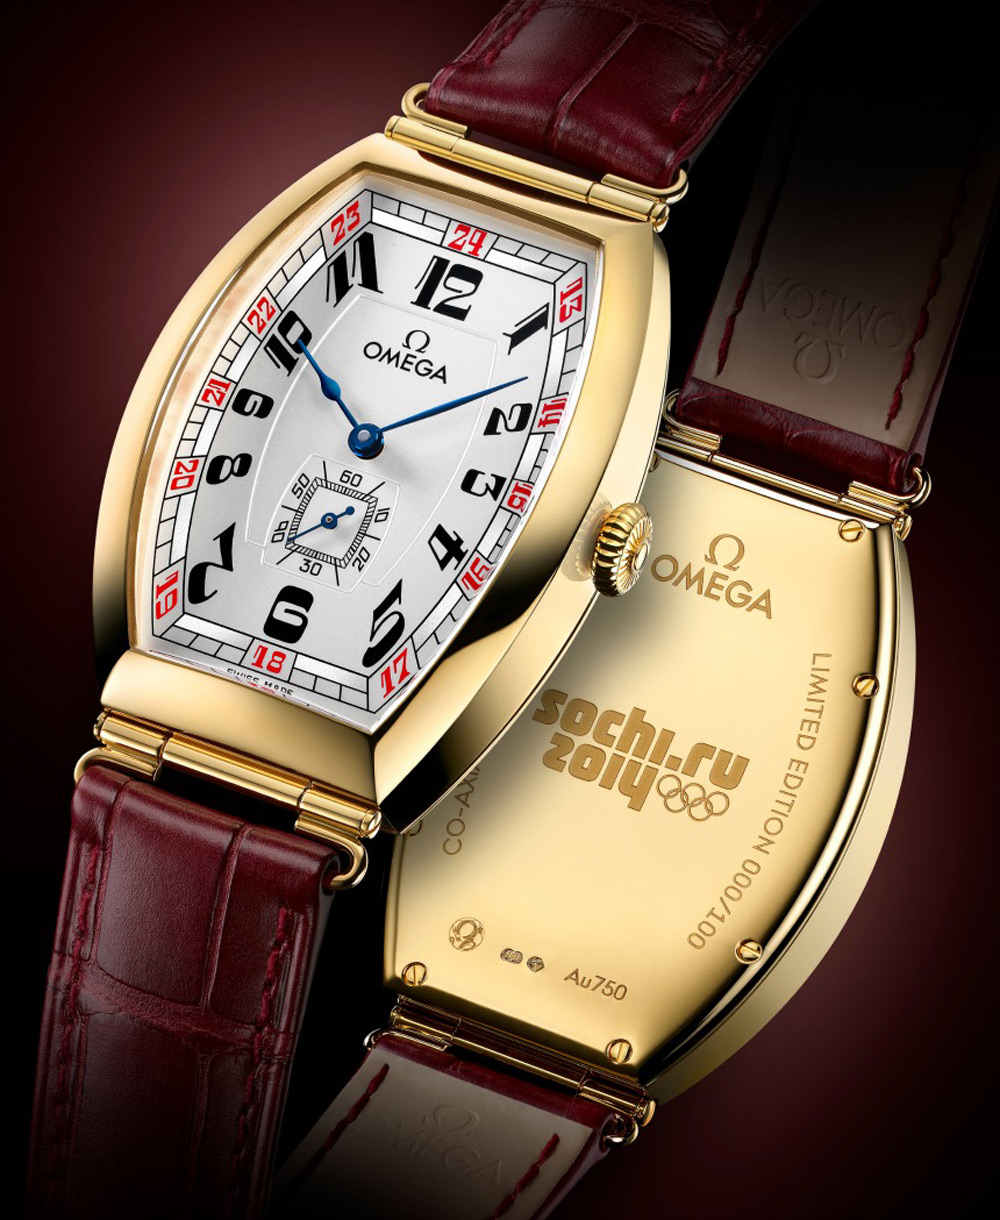 Швейцарские часы сайт. Omega Petrograd. Часы Омега a821. Omega Sochi 2014 Limited. Часы Omega escapement Limited Edition.